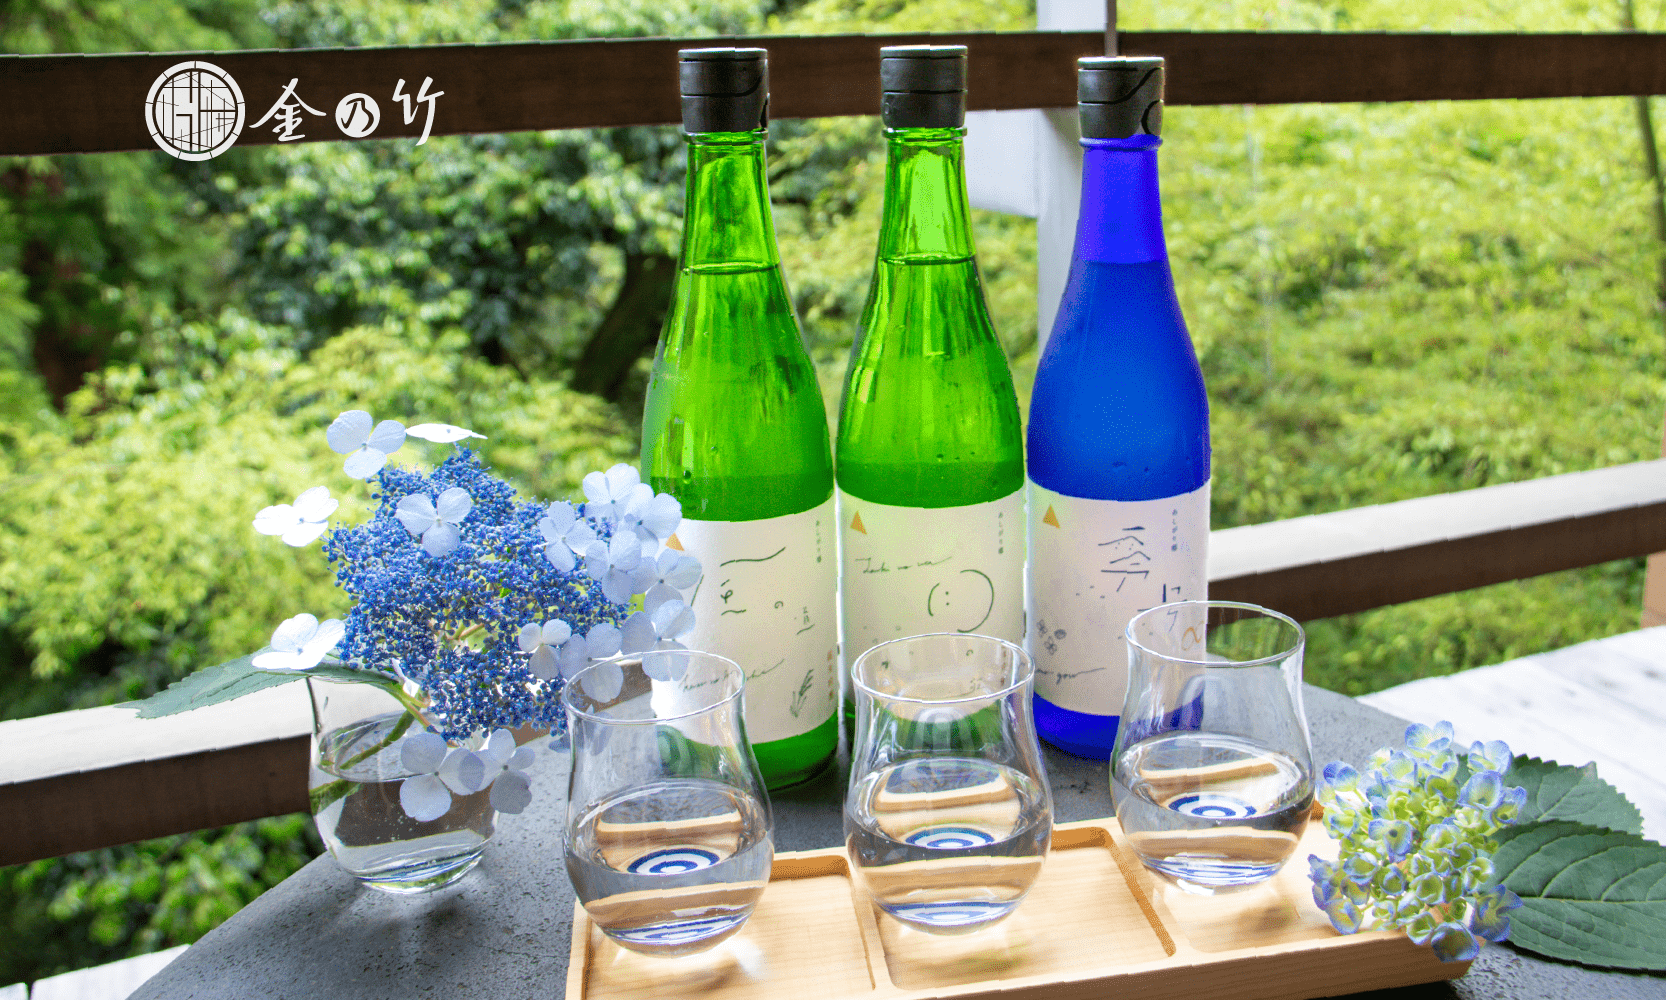 Offering "Hydrangea Flower Yeast" Sake Tasting Set in Hakone, Famous for Its Hydrangeas, Starting June 1st (Saturday)